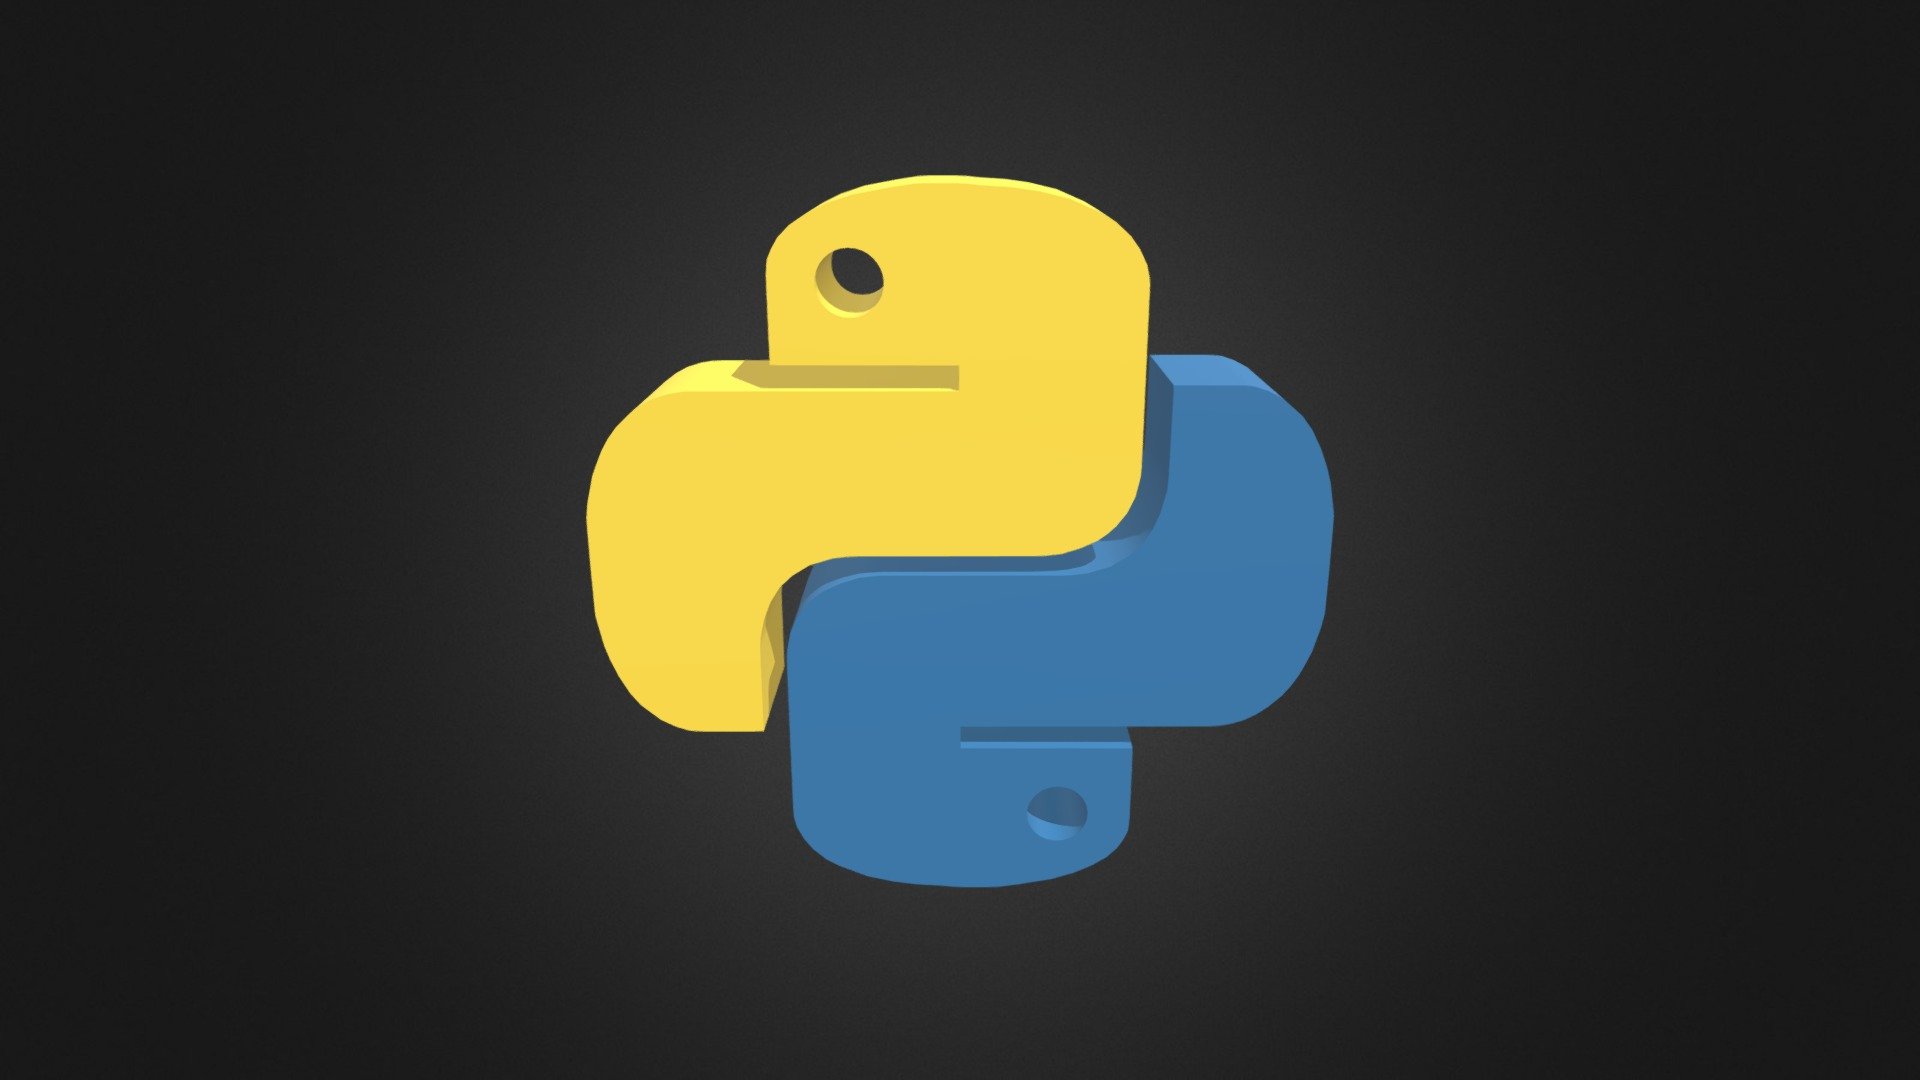 Python Programming language - Download Free 3D model by Acvantad ...